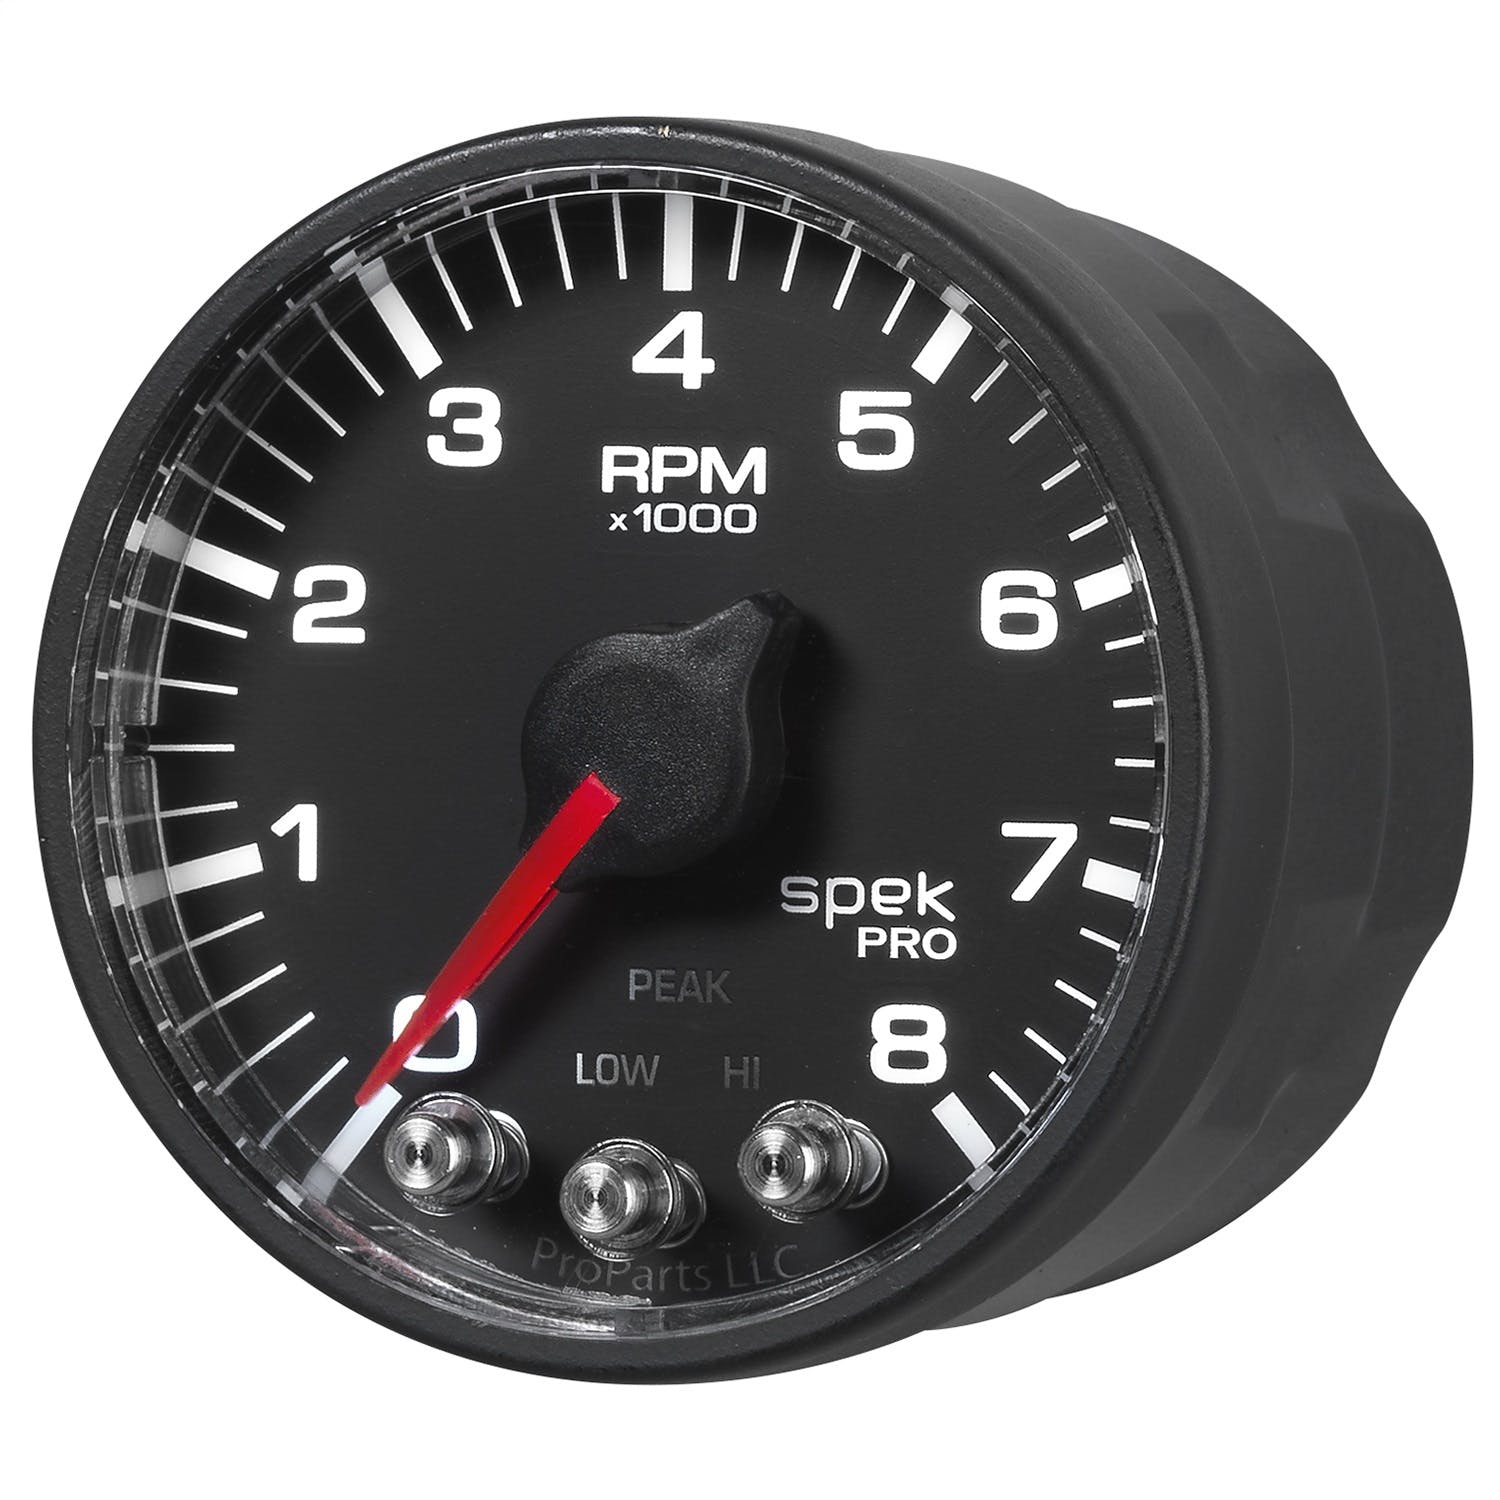 AutoMeter Products P334328 Tach 2in. 8k RPM w Shift Light/Pk Mem Blk/Blk Spek